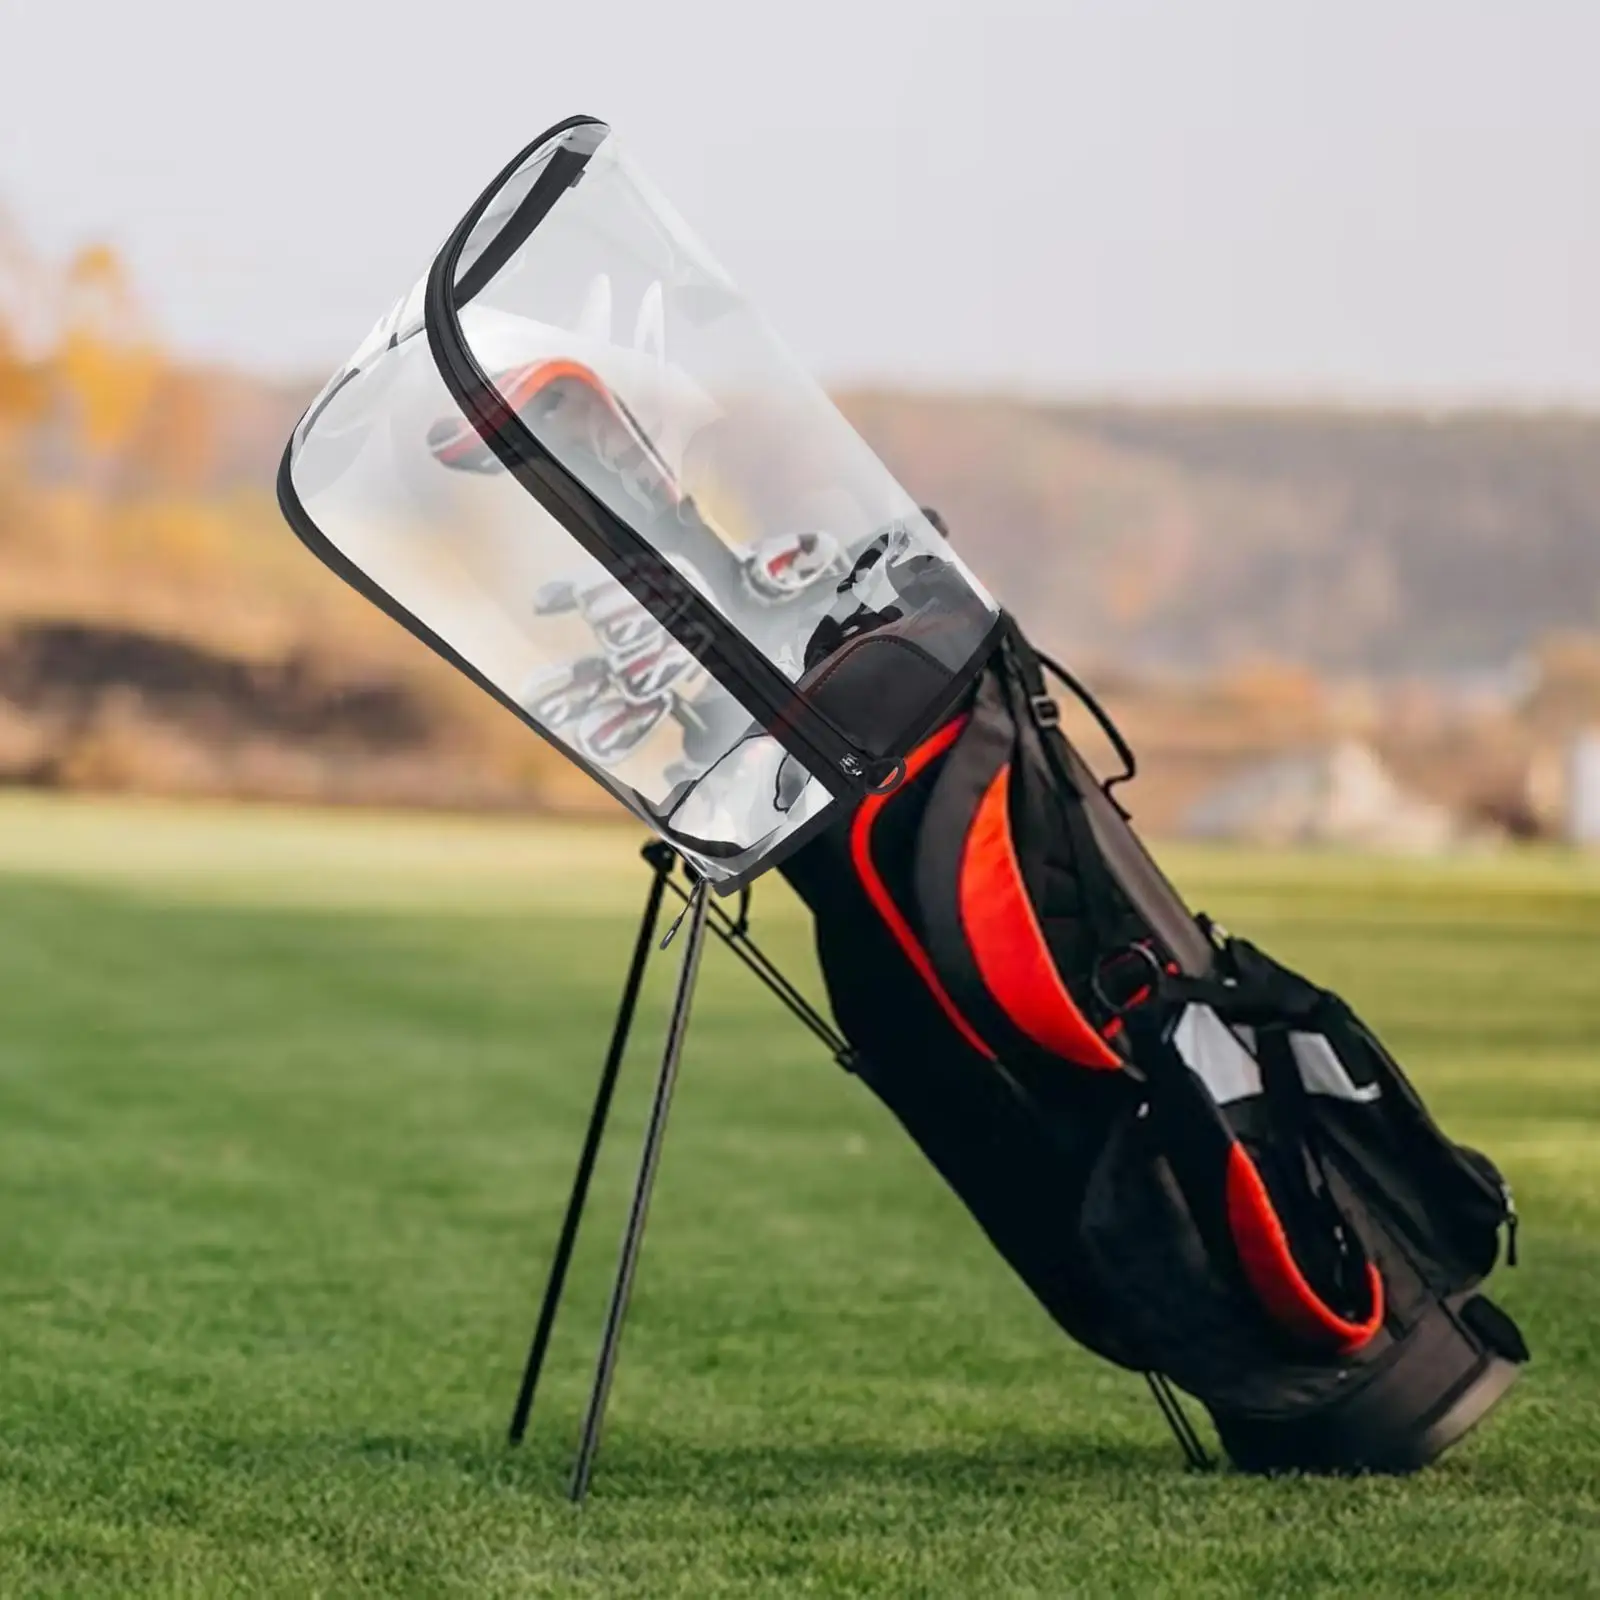 Rain Cover Rainproof Waterproof Durable Golf Bag Hood Golf Bag Protector For Golf Push Carts Gifts